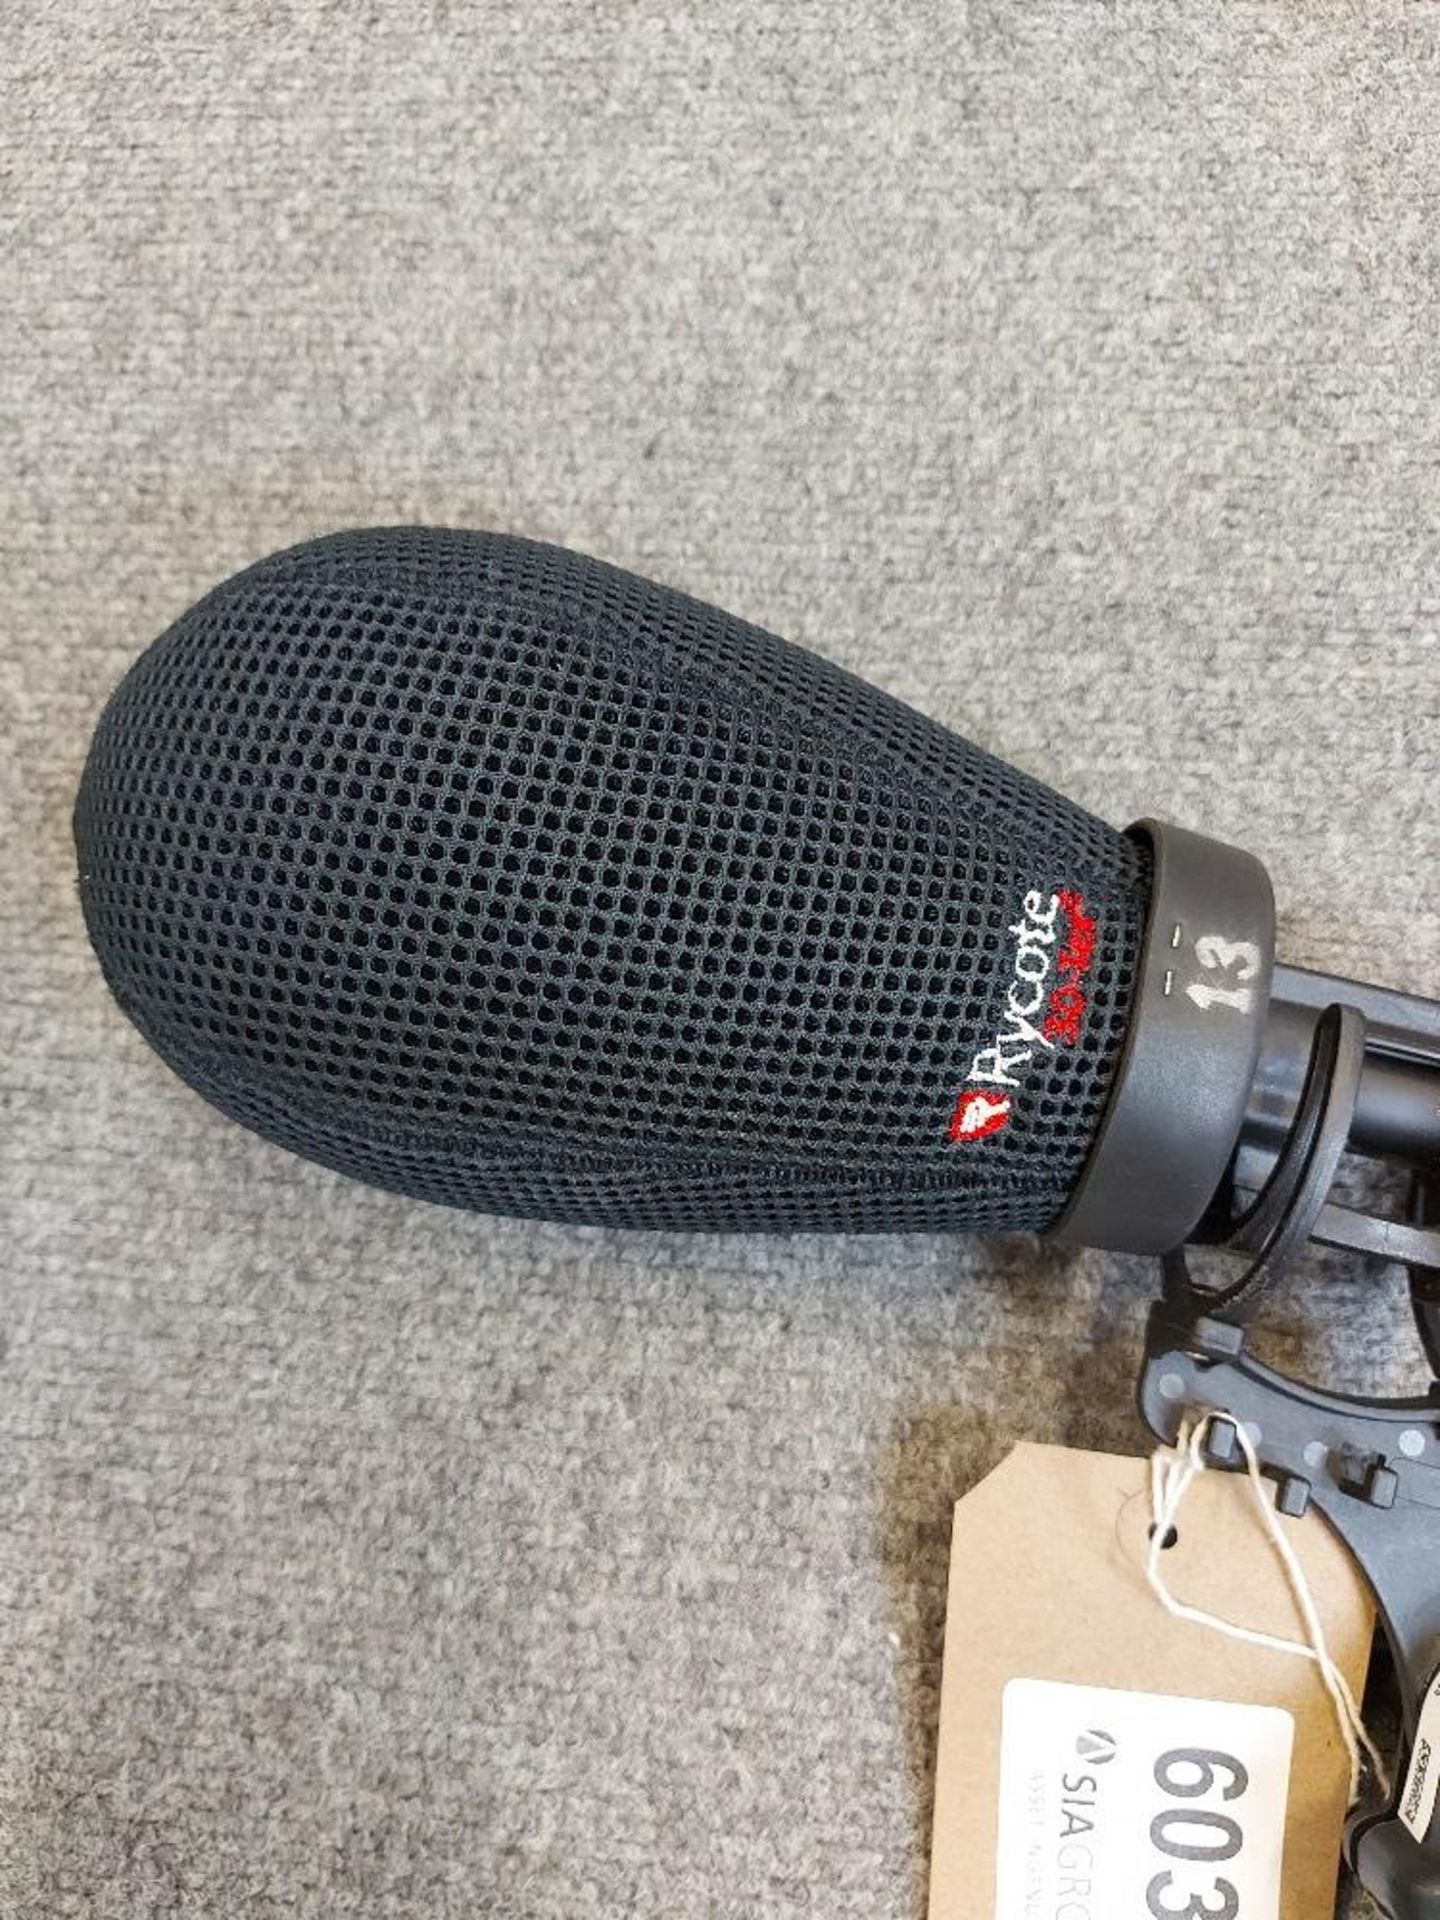 Sanken CS-1E Microphone With K-Tek Boom Pole, Rycote Softie Windshield And Neutrik Cable - Image 3 of 5